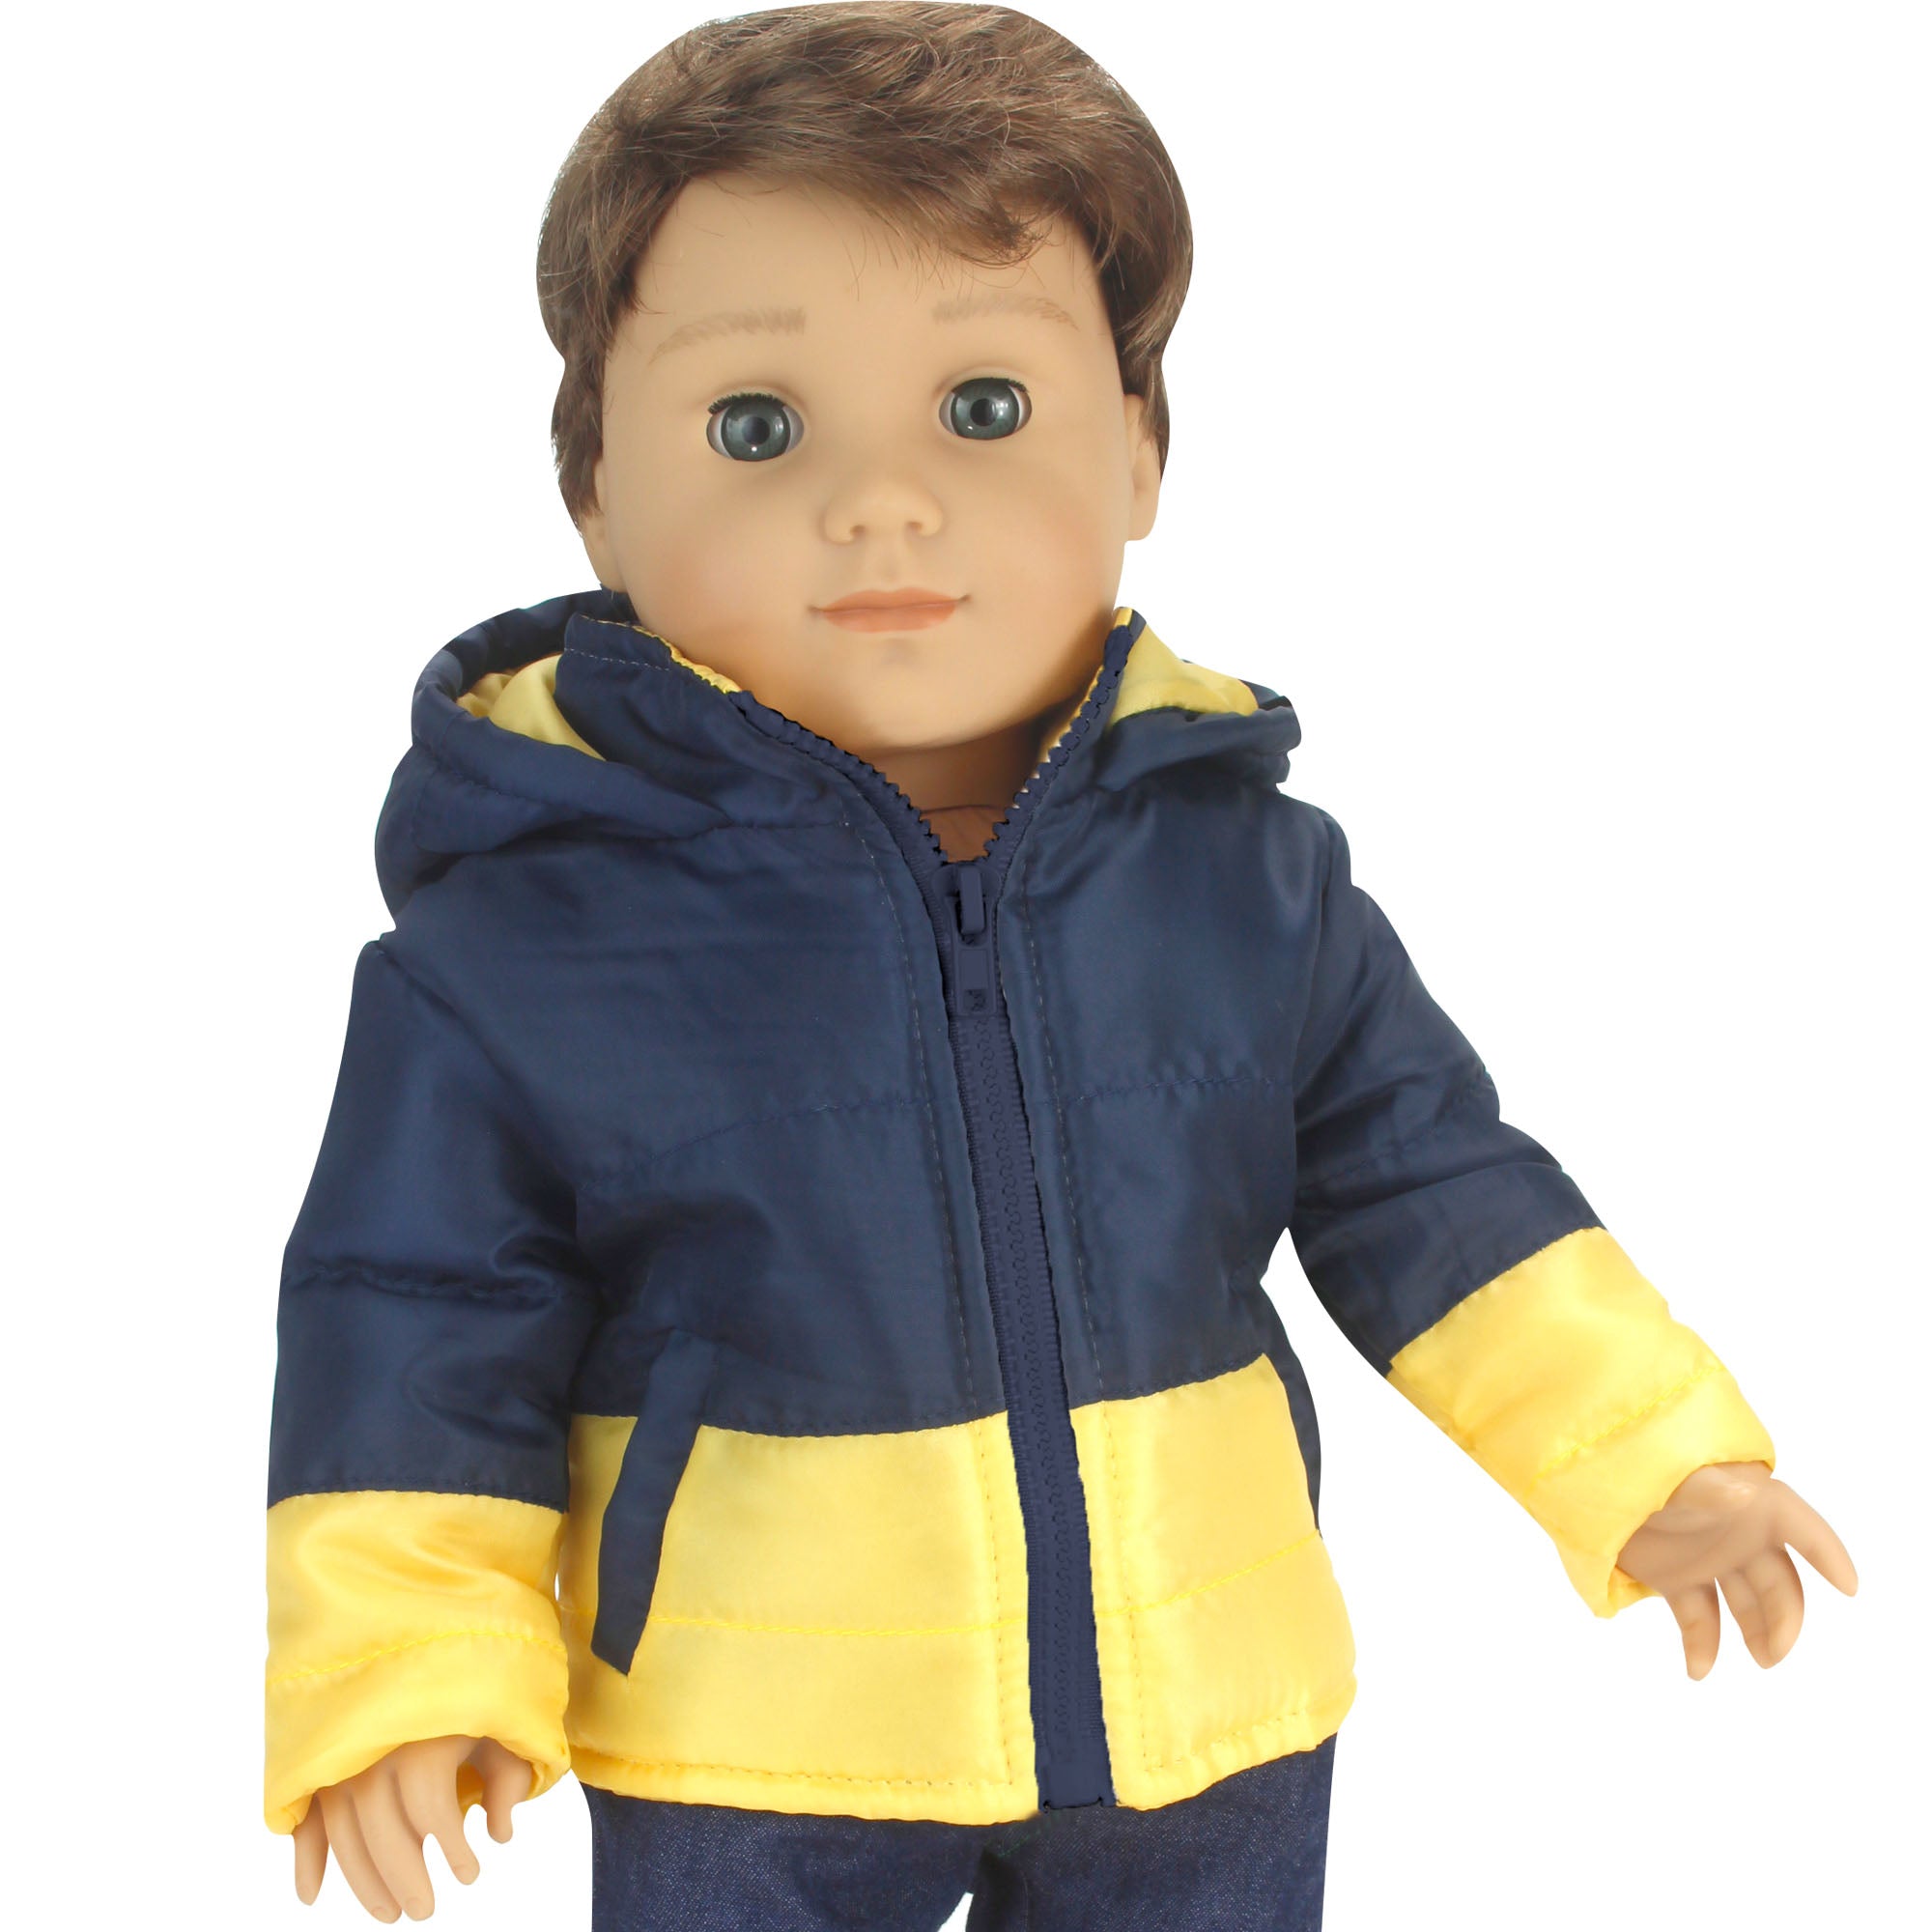 Sophia's Two-Tone Jacket with Hood for 18" Boy Dolls, Navy/Yellow